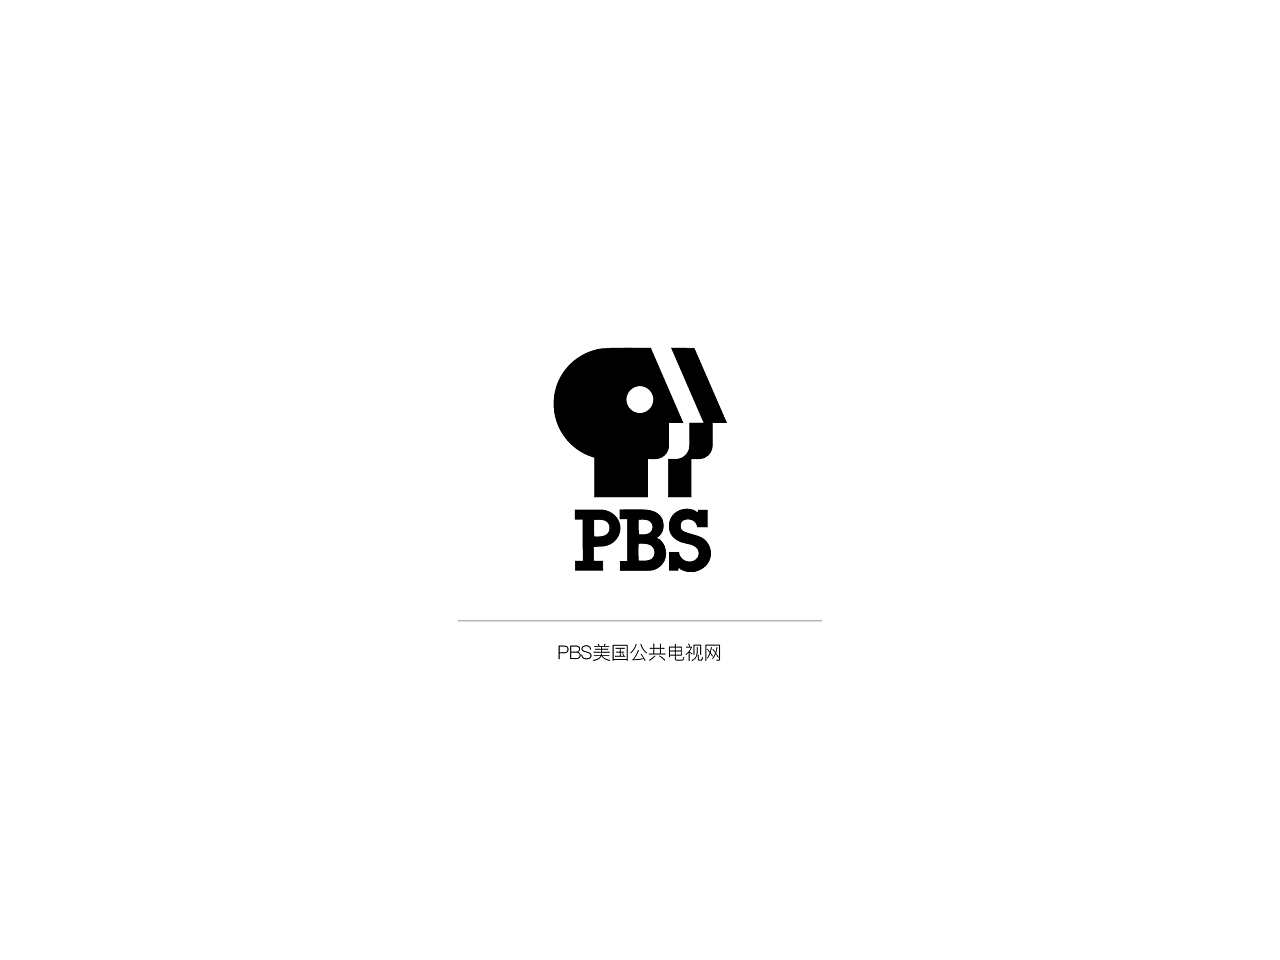 PBS美国公共电视网是美国的非营利性公共电视机构。其频道中知名度高的节目包括科学节目《新星》、《自然》、《发现》，儿童节目《芝麻街》、《发电公司》、金融节目《华尔街一周》、《地理》等。